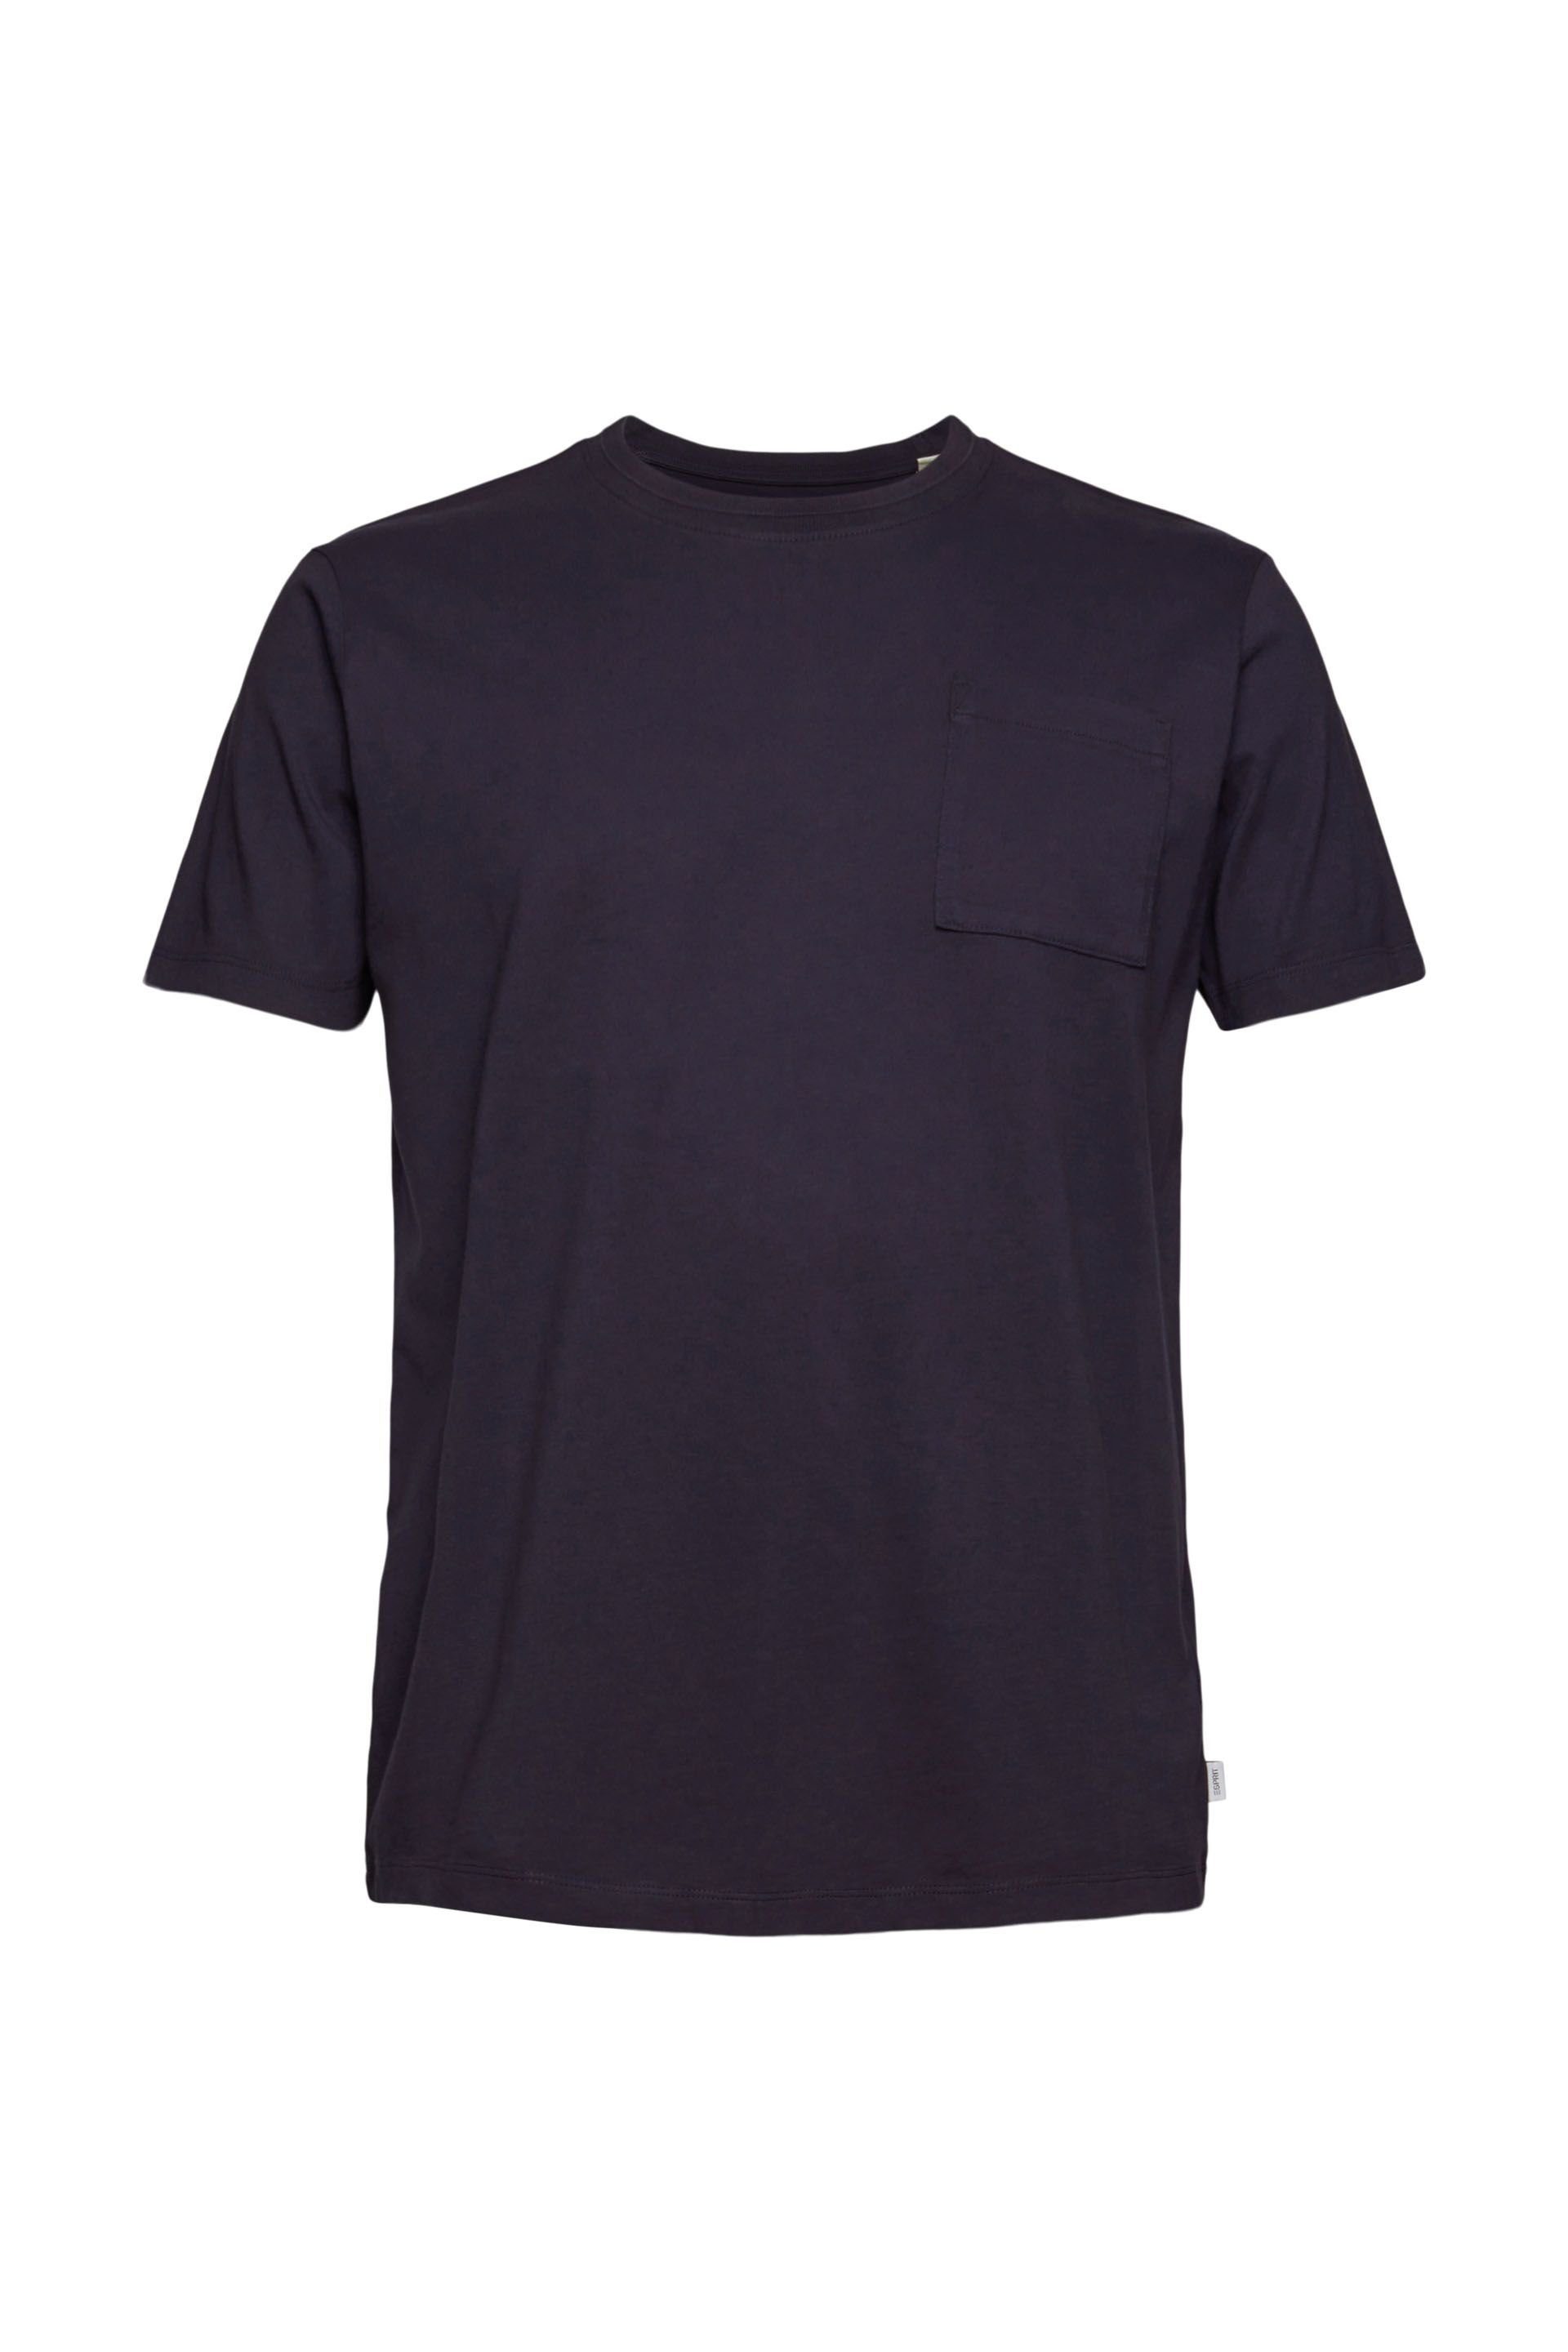 Esprit T-Shirt navy | T-Shirts